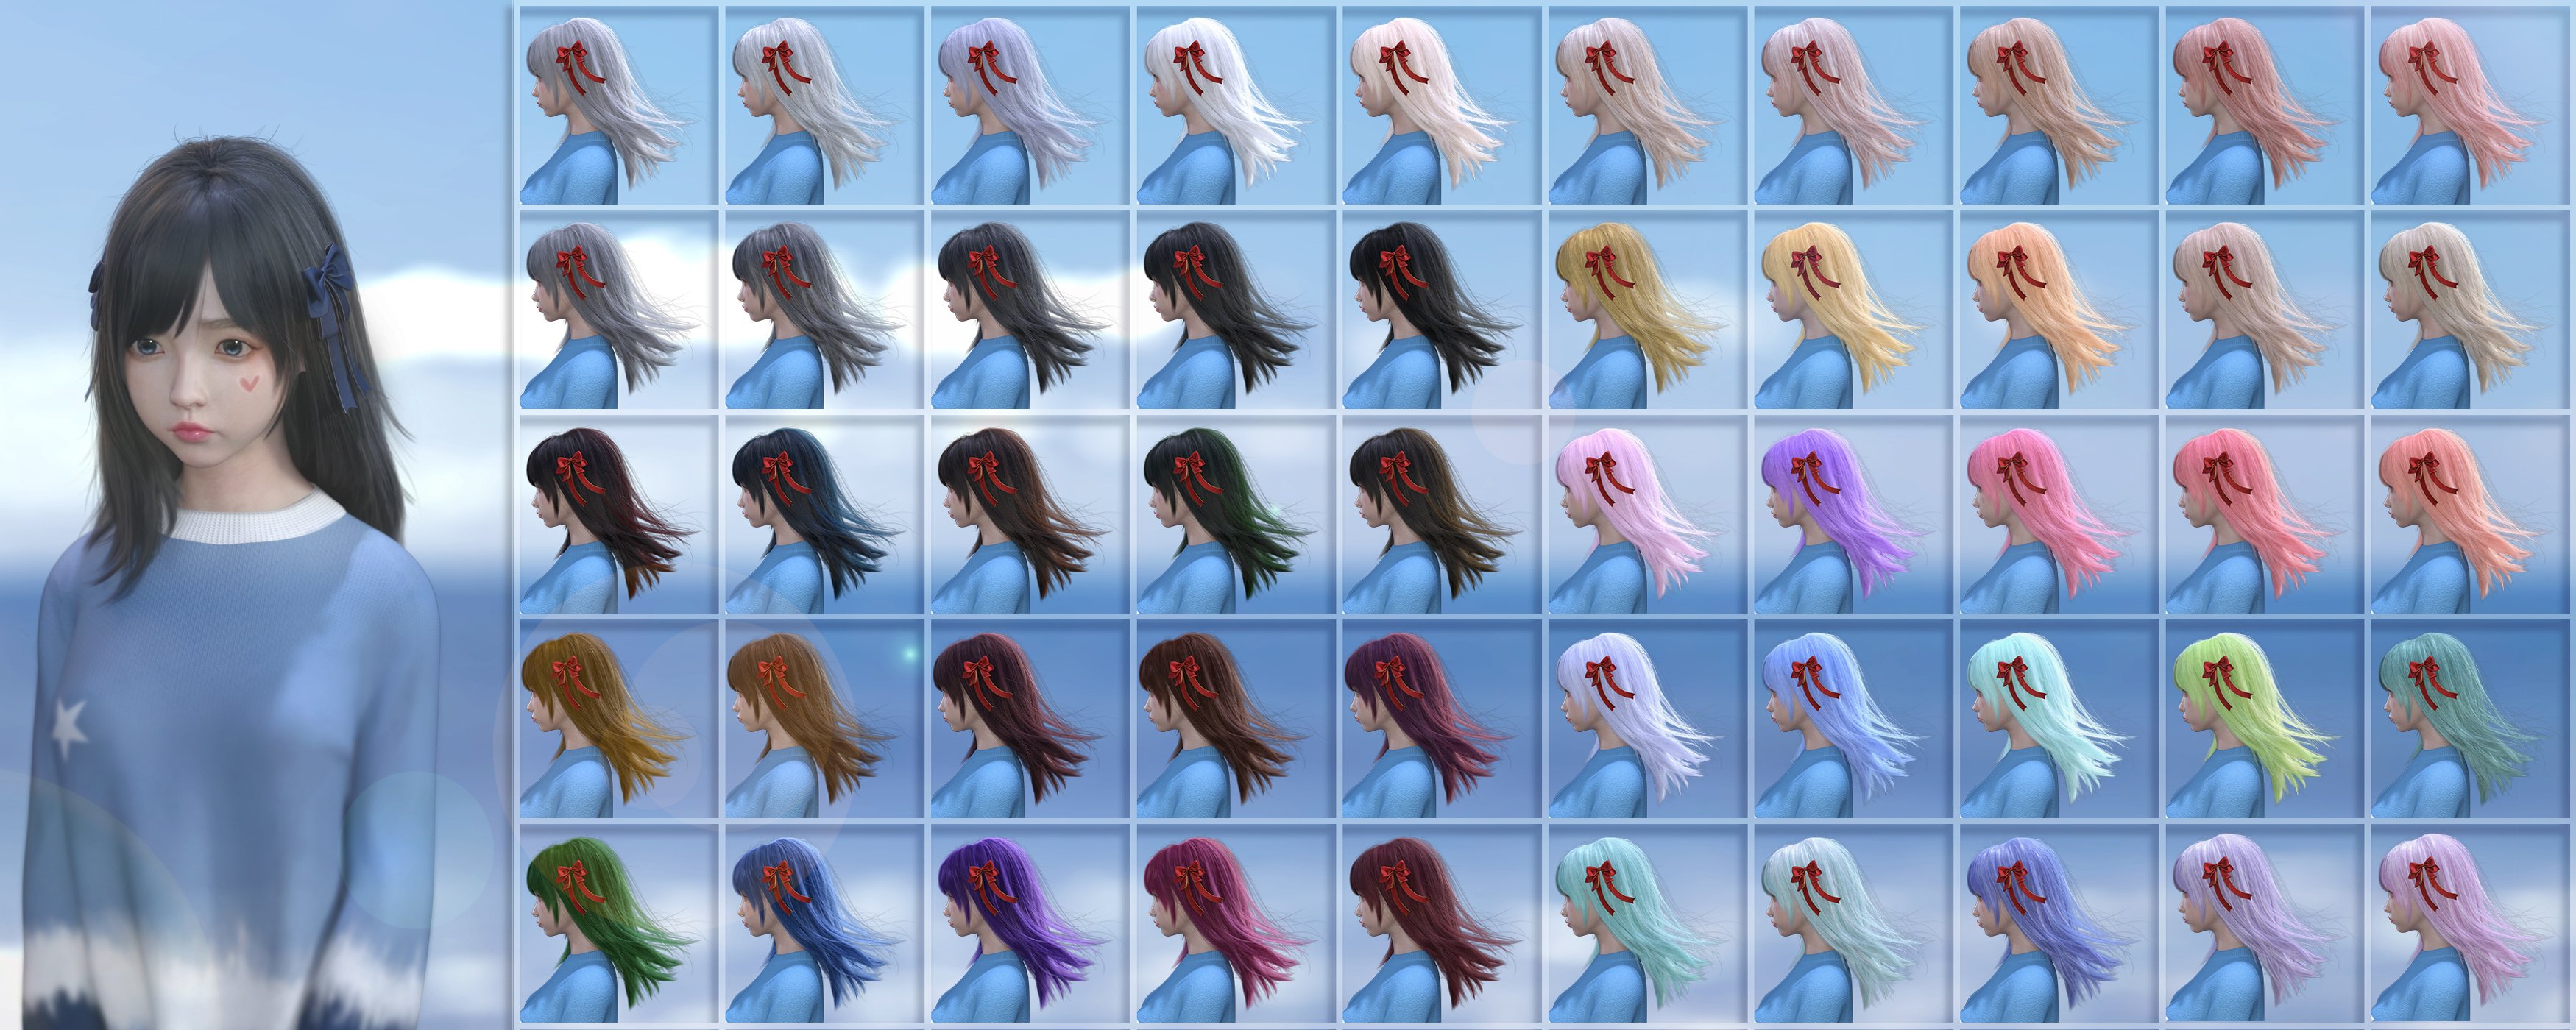 SU Medium Length Hair for Genesis 8 and 8.1 Females by: Sue Yee, 3D Models by Daz 3D